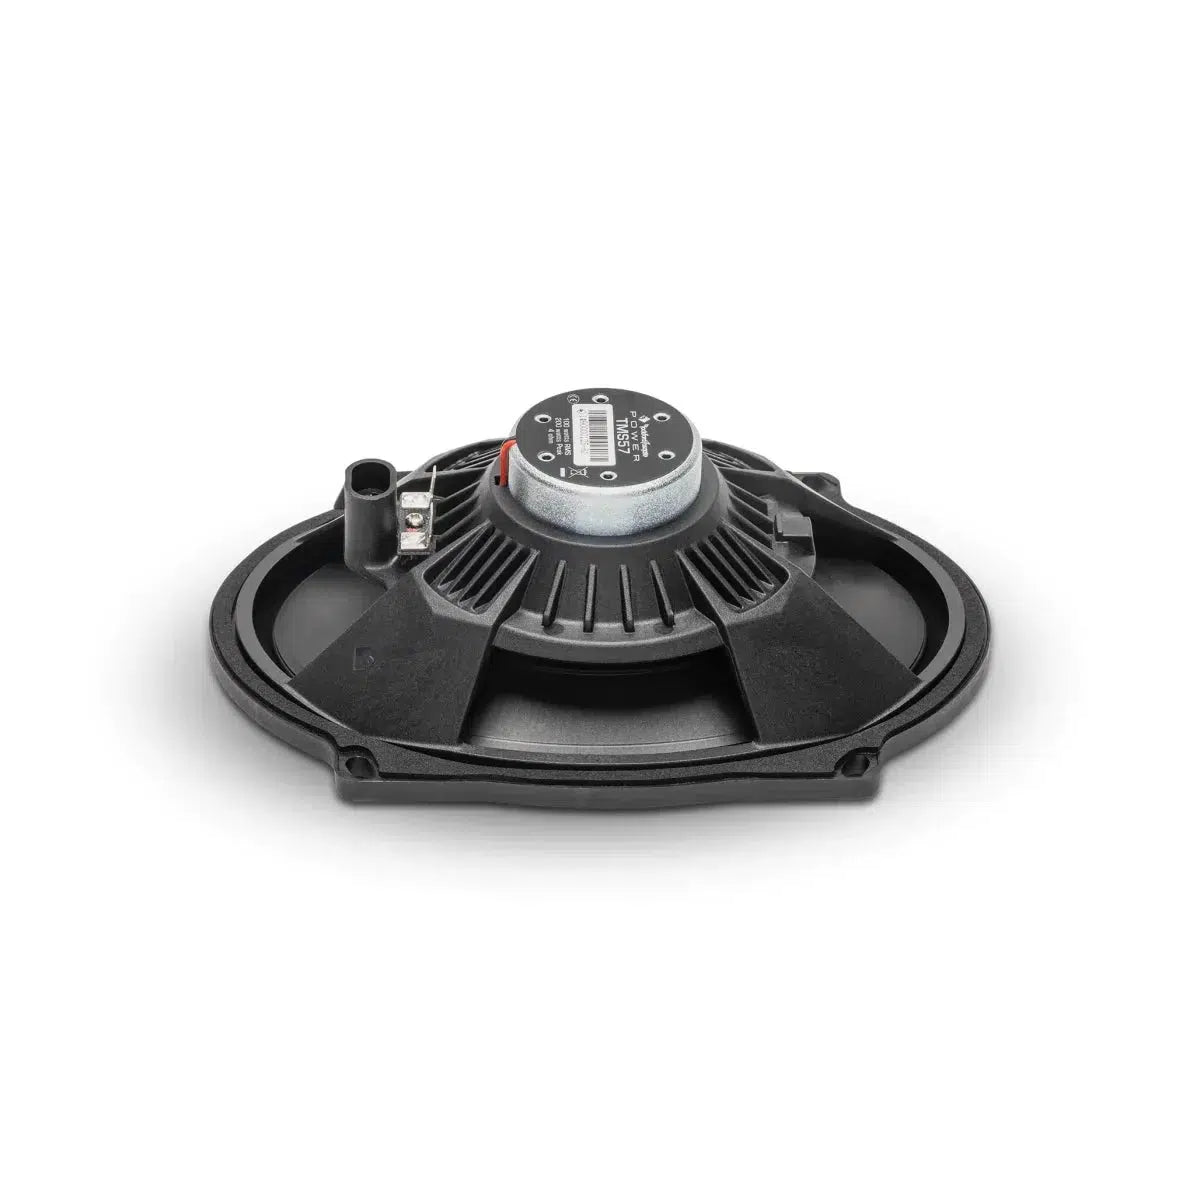 Rockford Fosgate-TMS57-5 "x7" Coaxial Loudspeaker-Masori.de